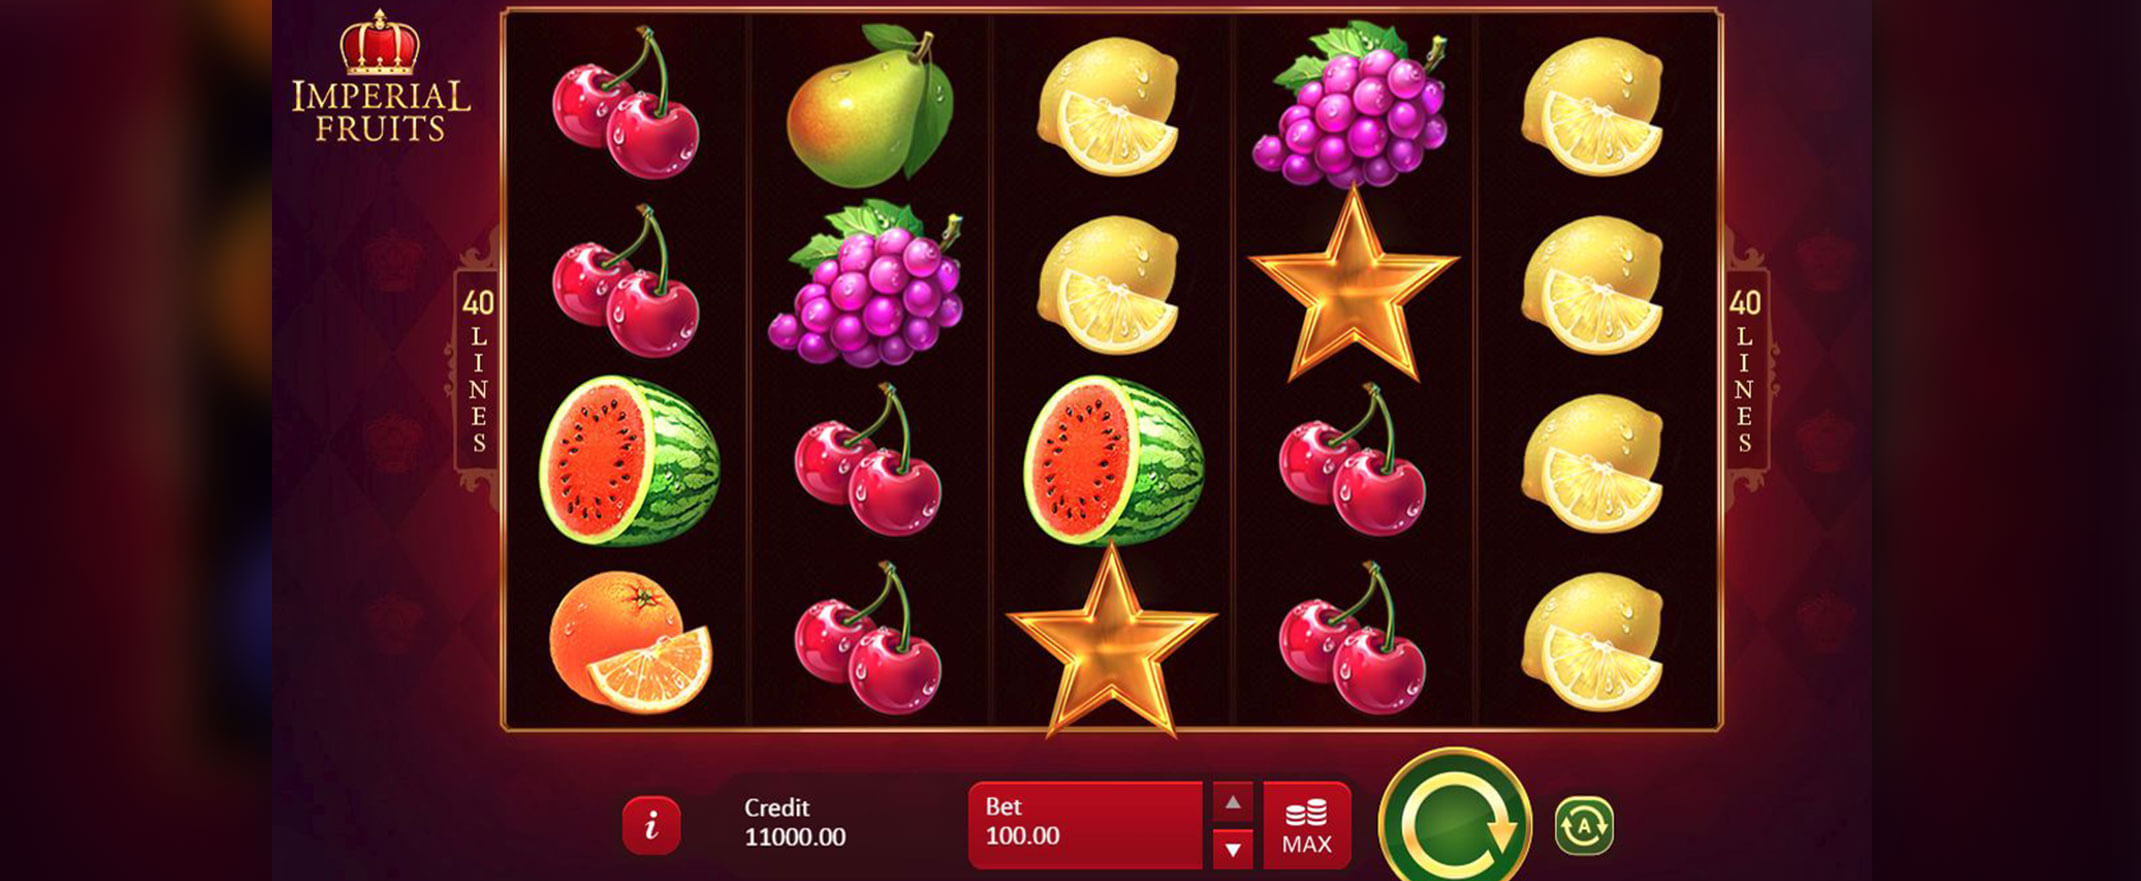 Imperial Fruits: 40 Lines - Playson peliautomaatti